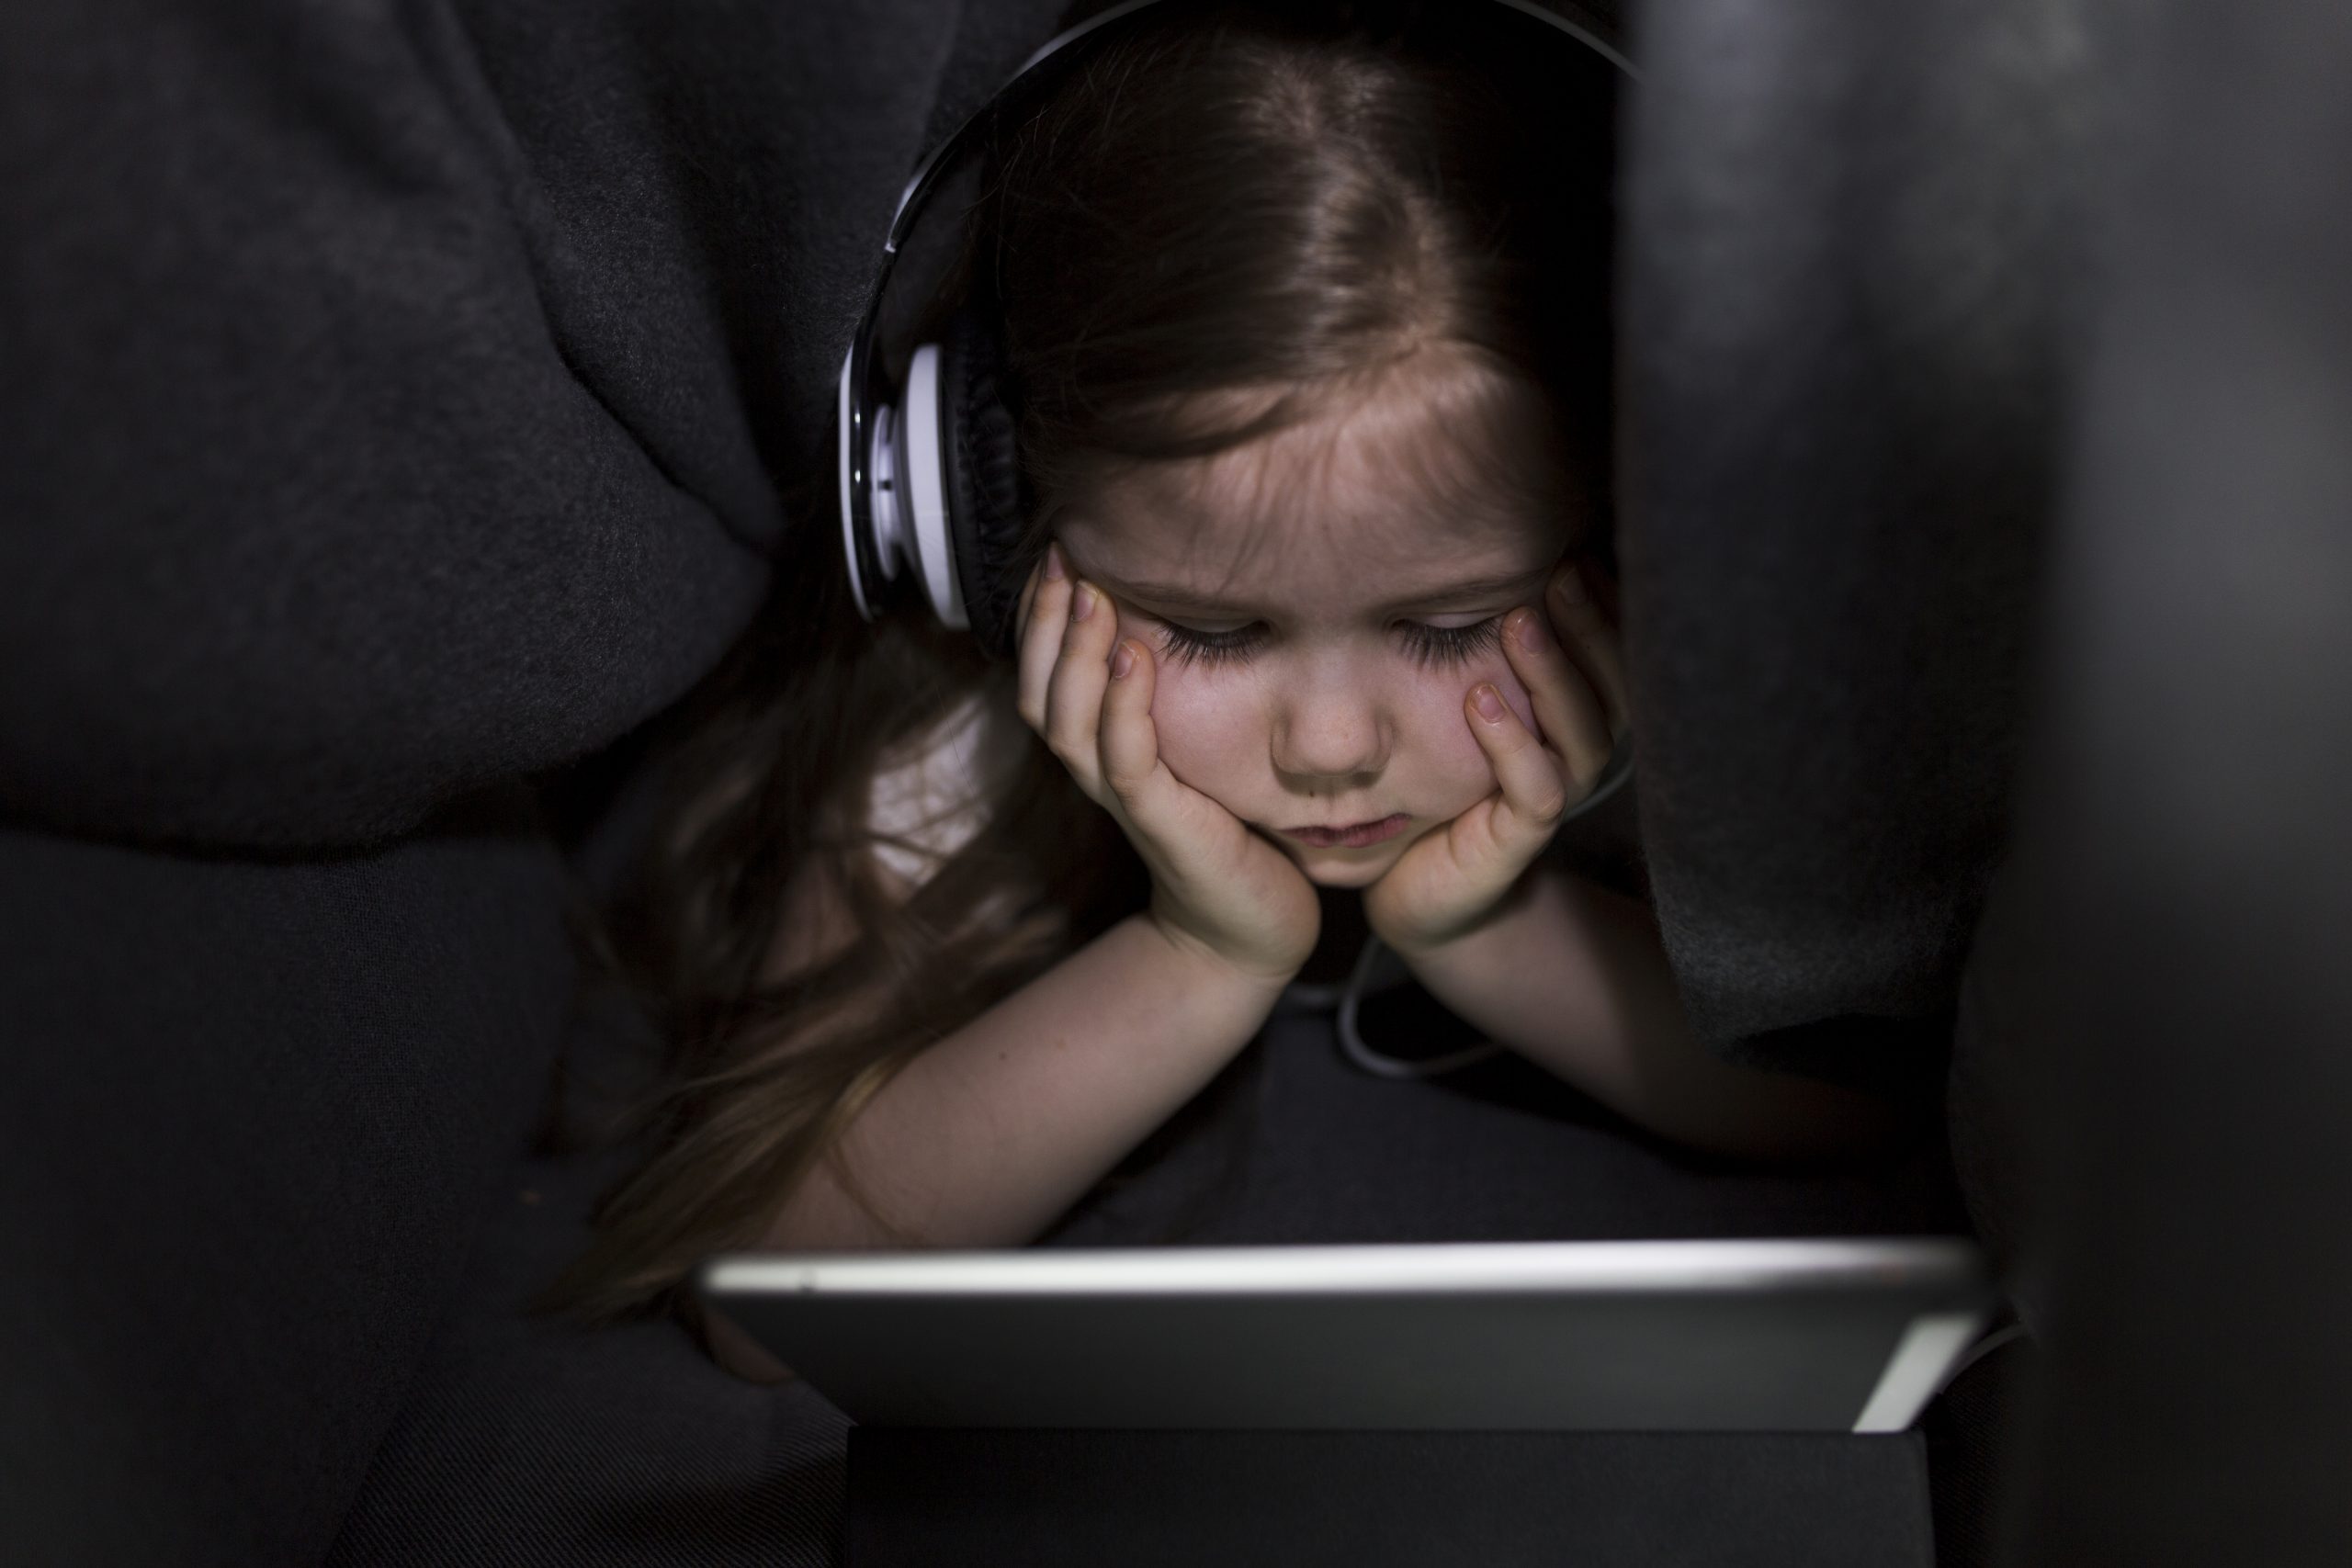  children come to harm online